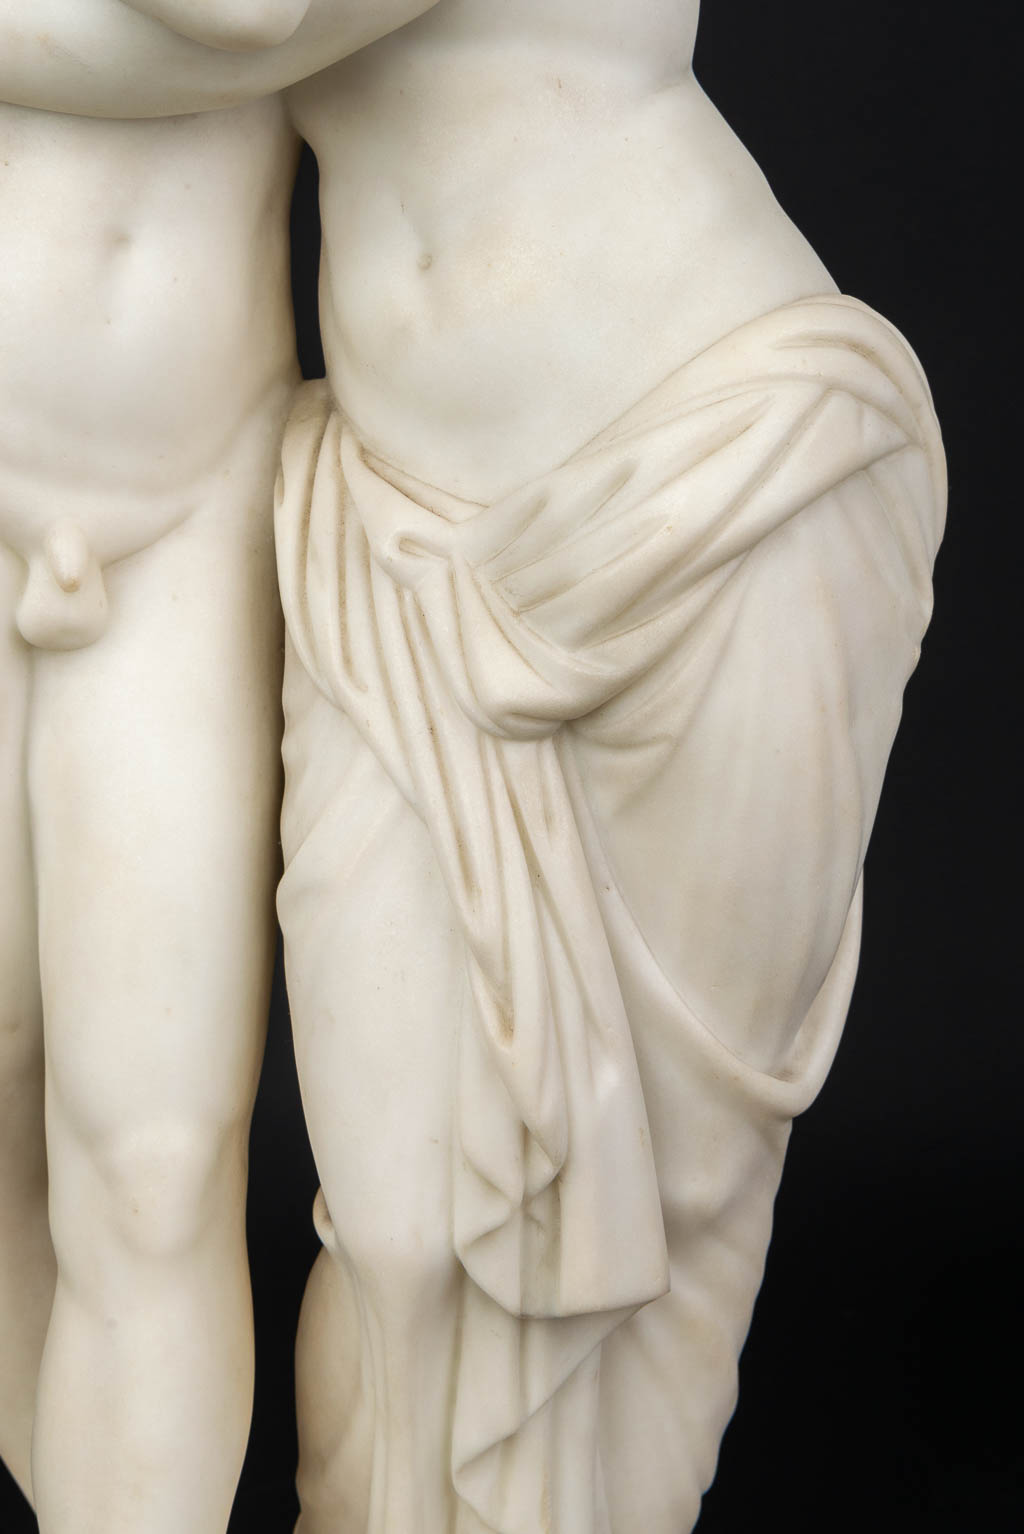 No signature found 'The Kiss' made of white Carrara marble. 19th century. (H:56cm)